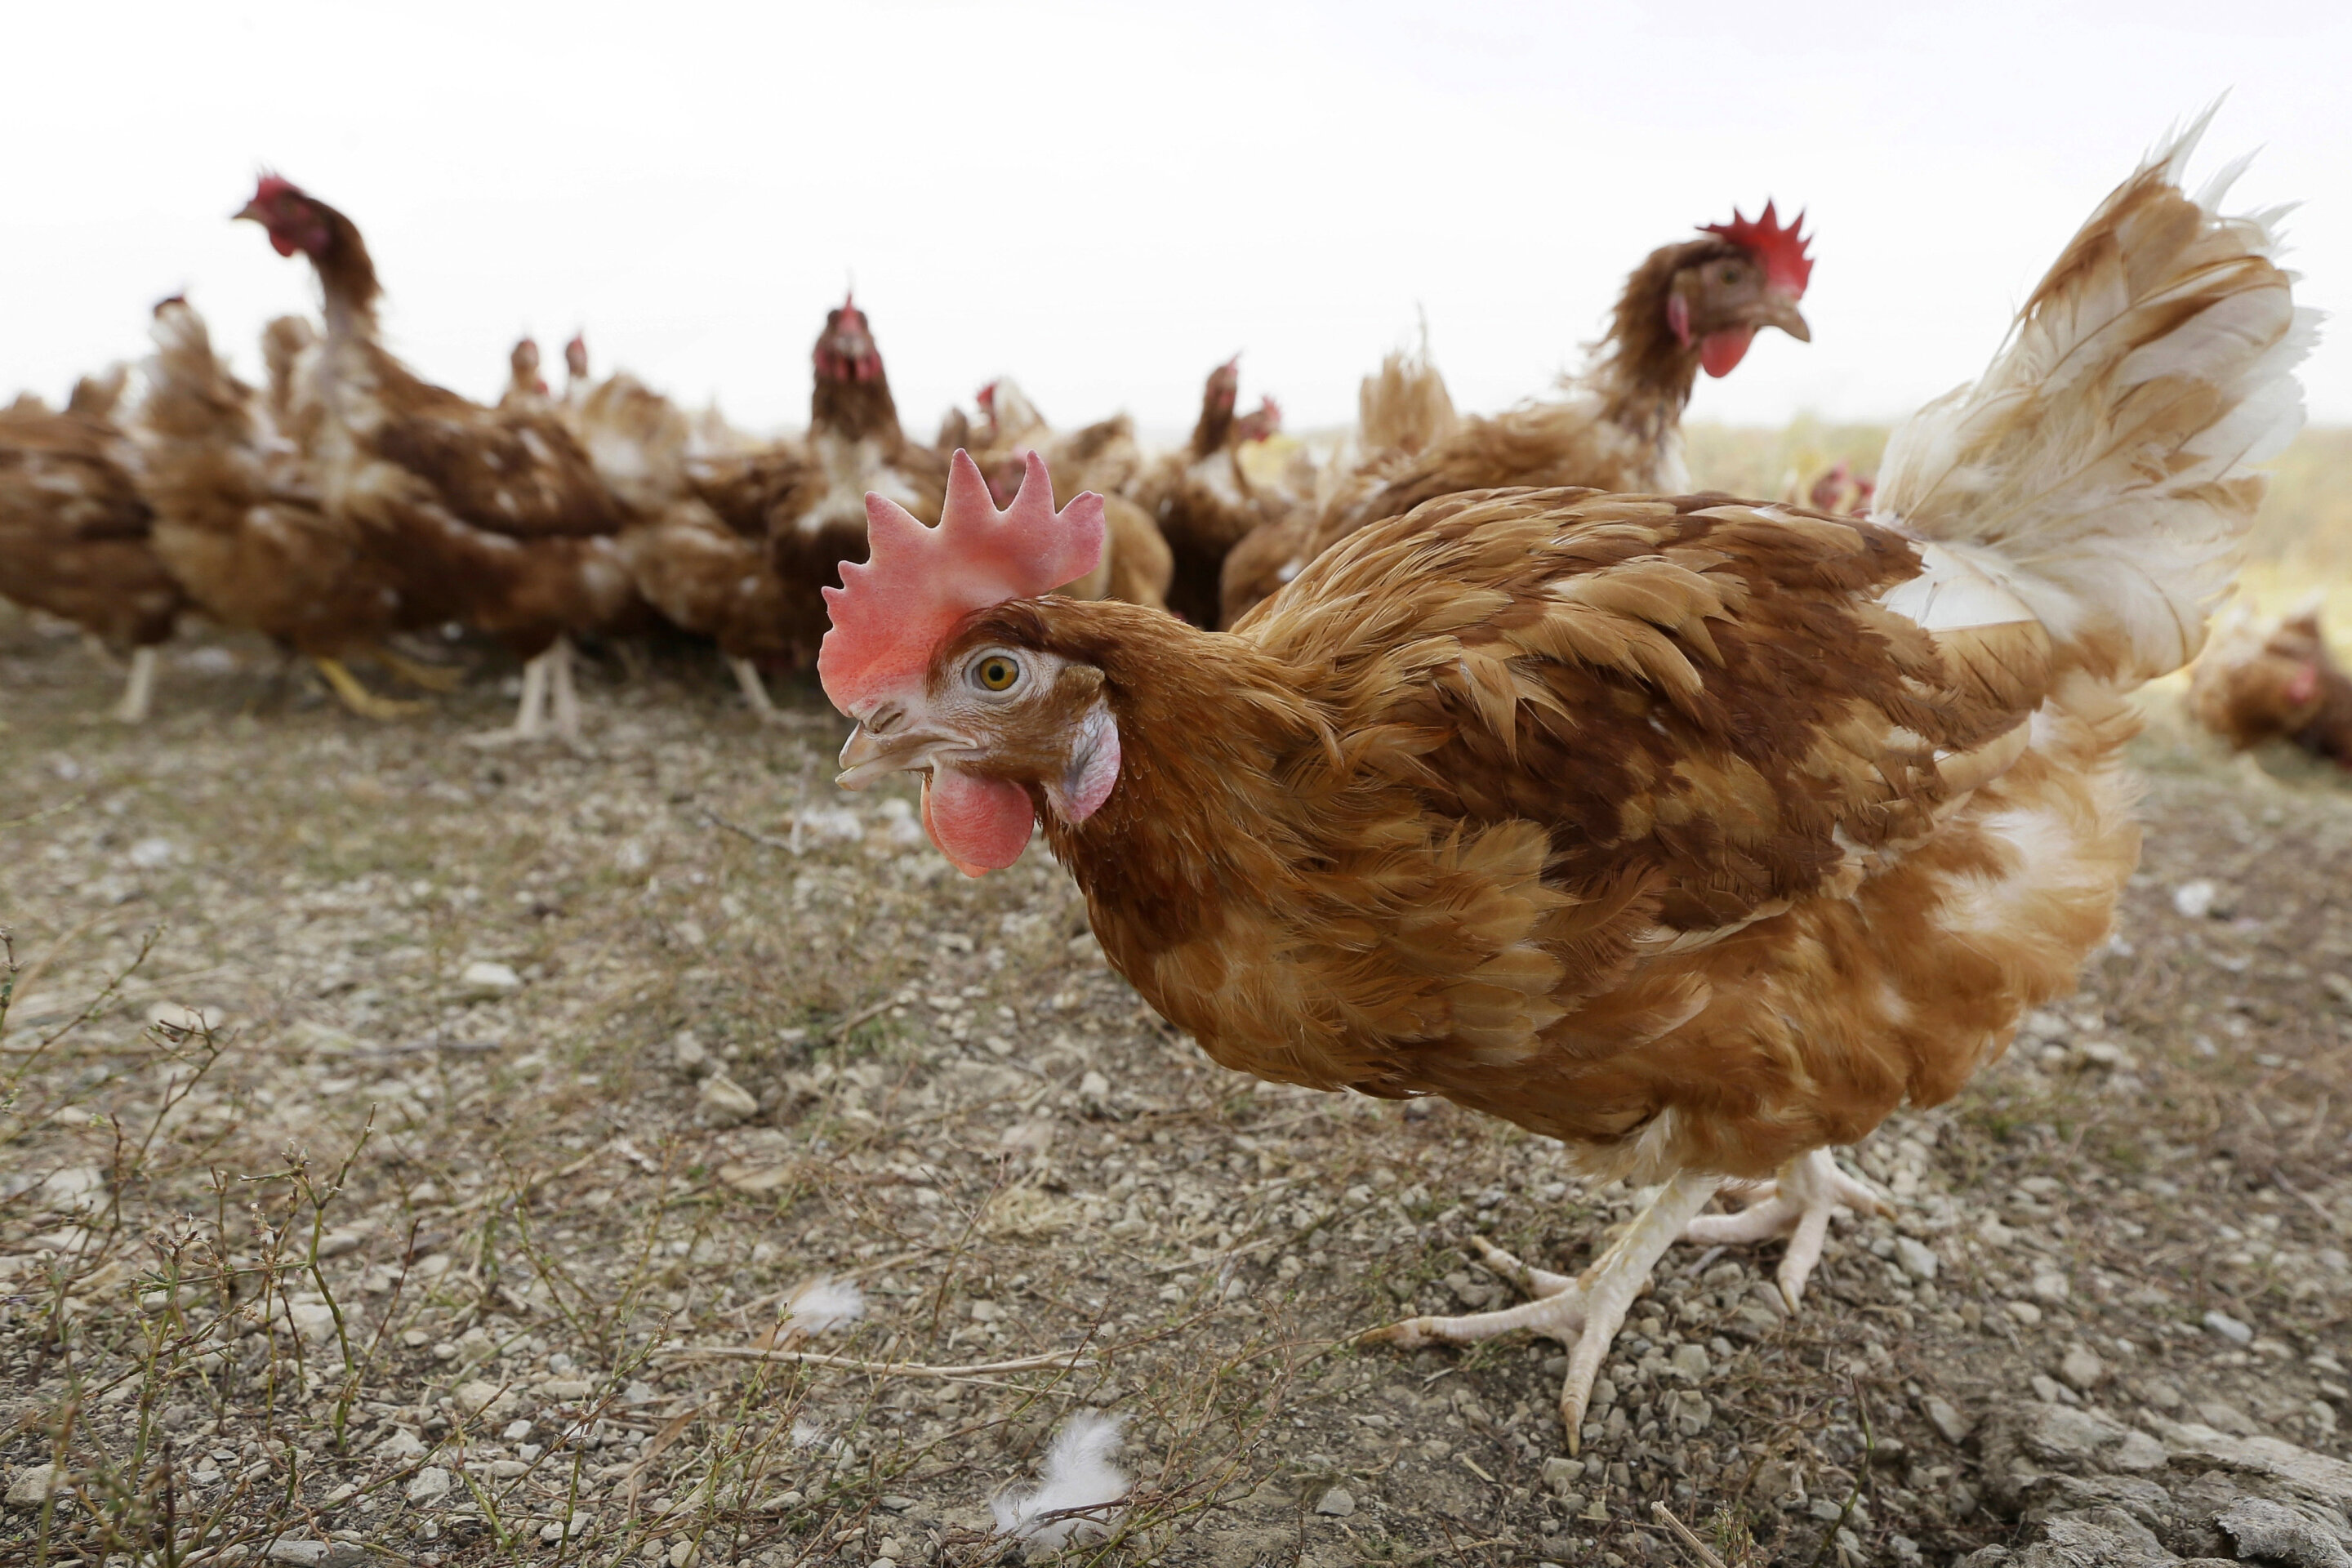 #Bird flu case forces killing of 5.3 million chickens in Iowa